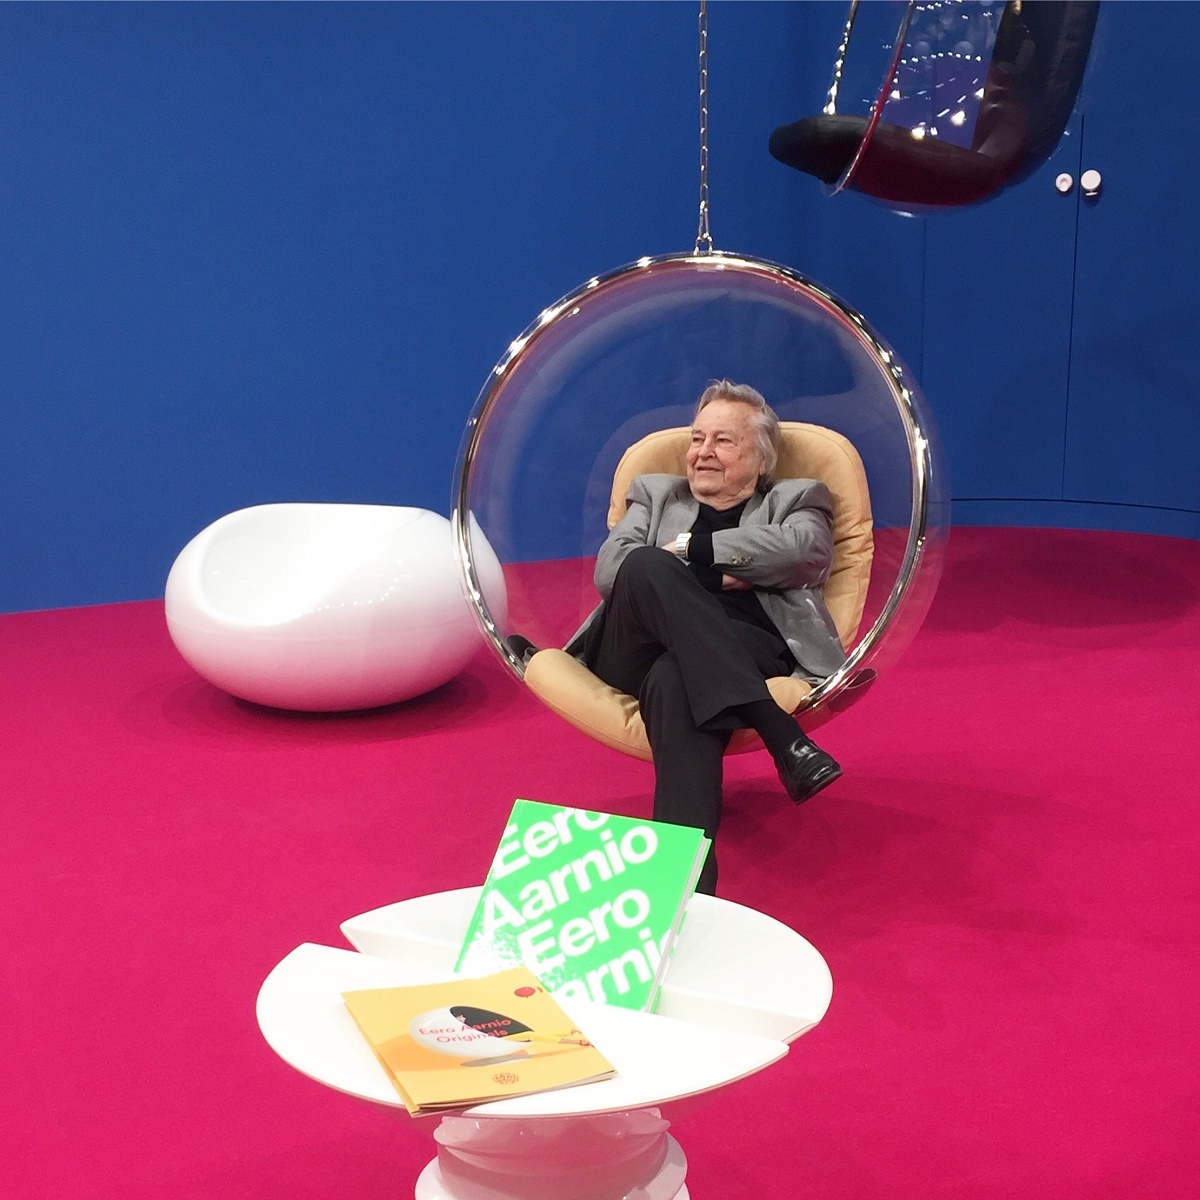 дизайнер Ээро Аарнио в своем Bubble Chair